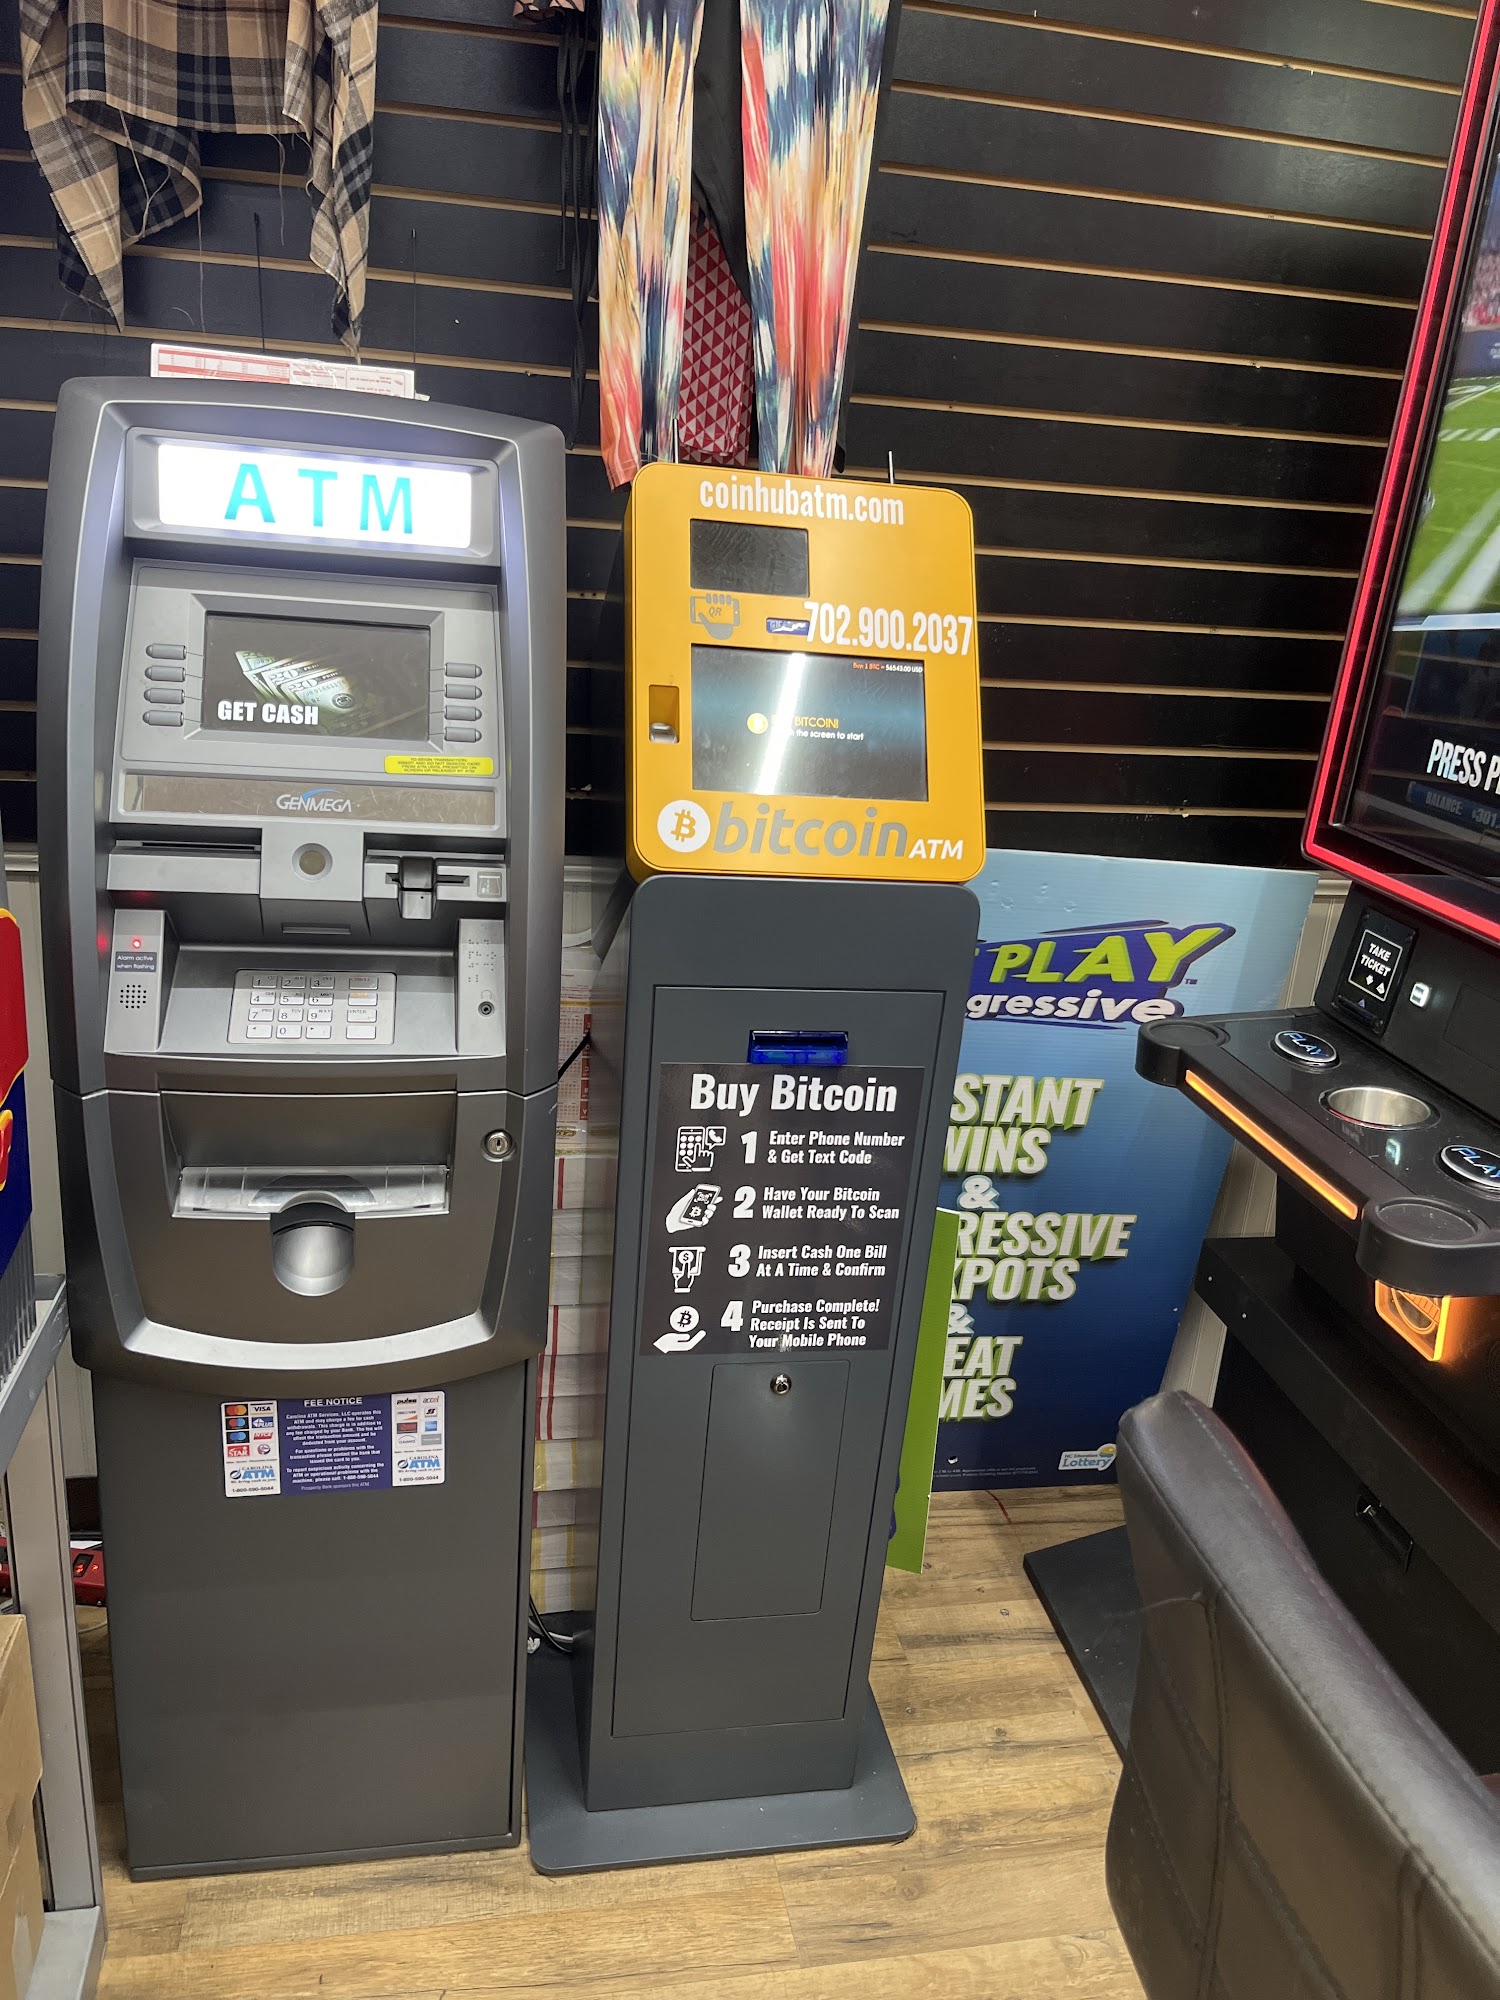 Bitcoin ATM Fayetteville - Coinhub